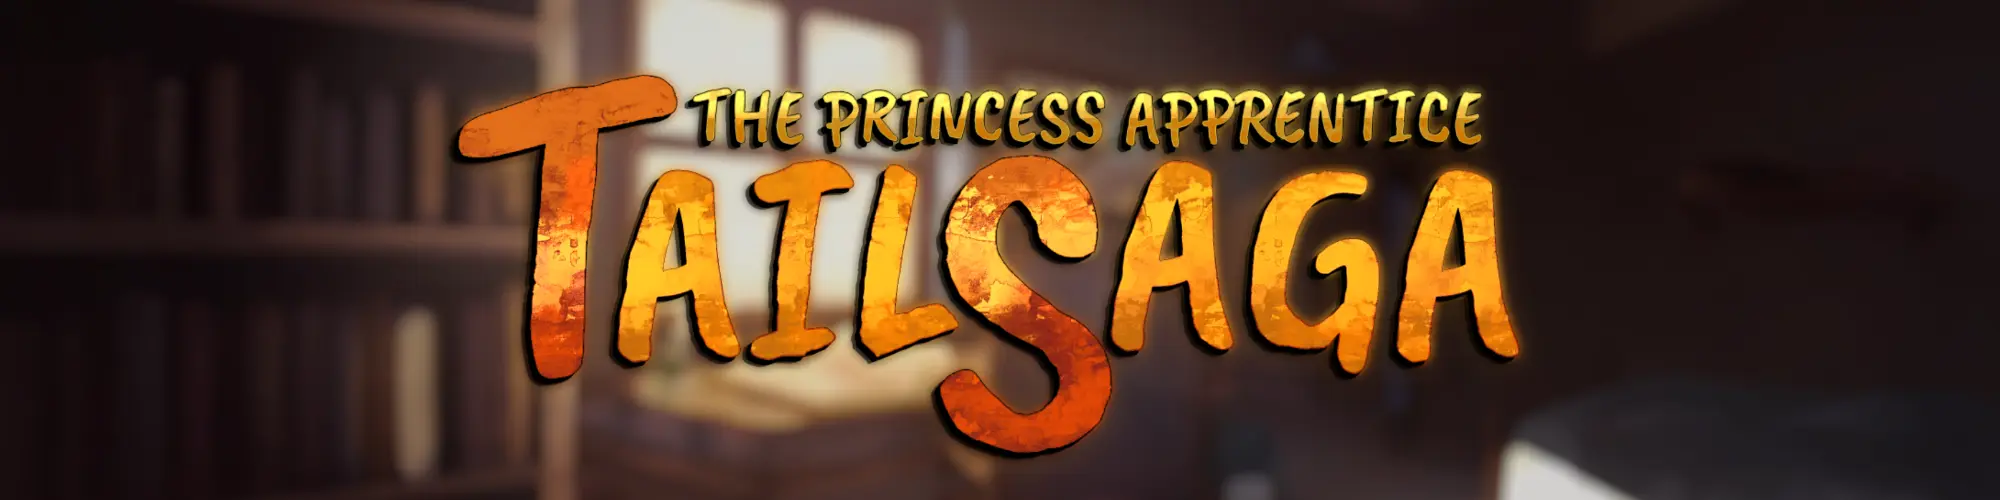 Tail Saga: The Princess Apprentice [v1.0 Teaser] main image